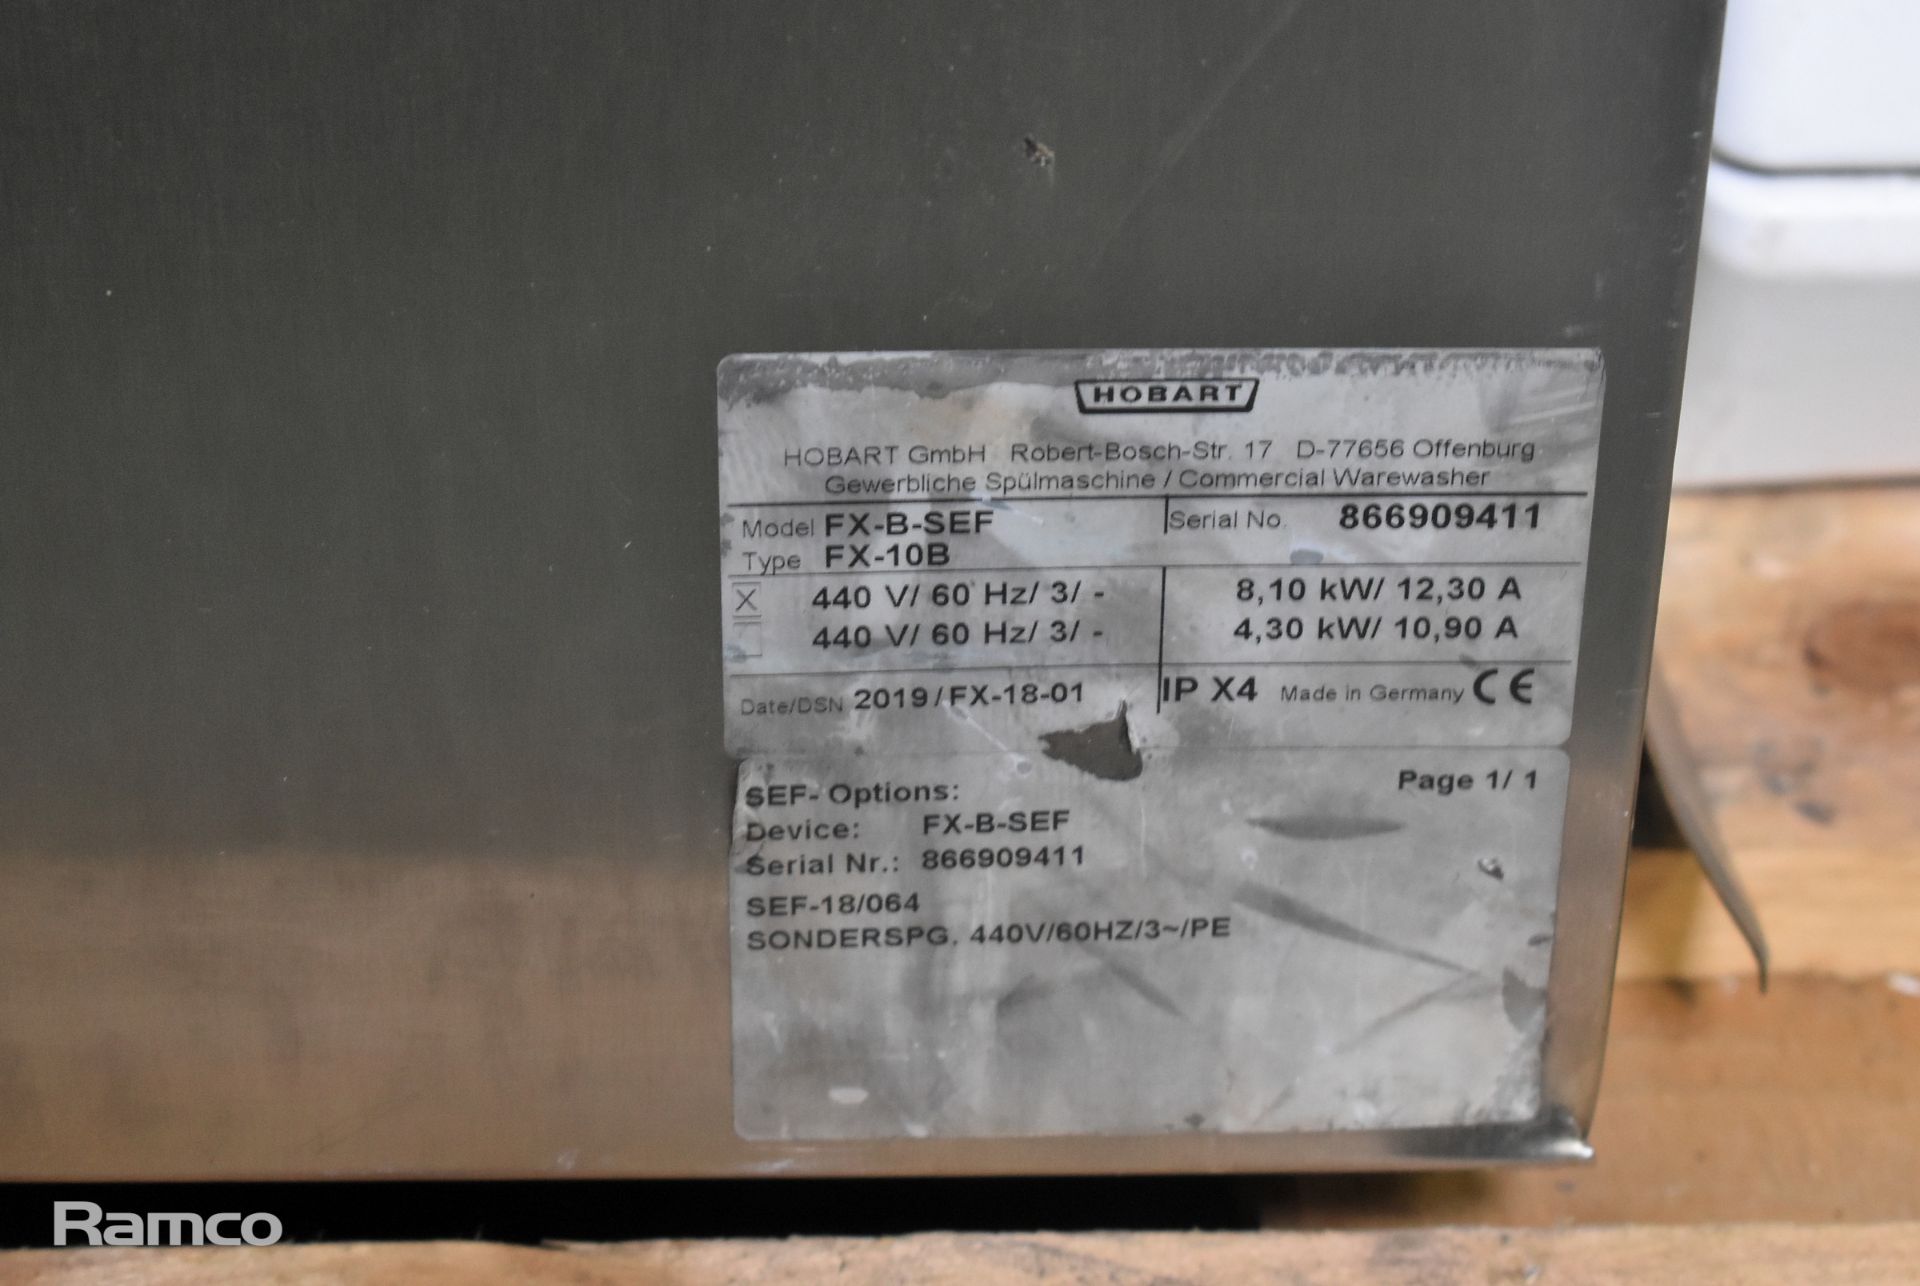 Hobart FX-B-SEF stainless steel dishwasher - 440V 60Hz - W 600 x D 600 x H 820mm - Image 3 of 5